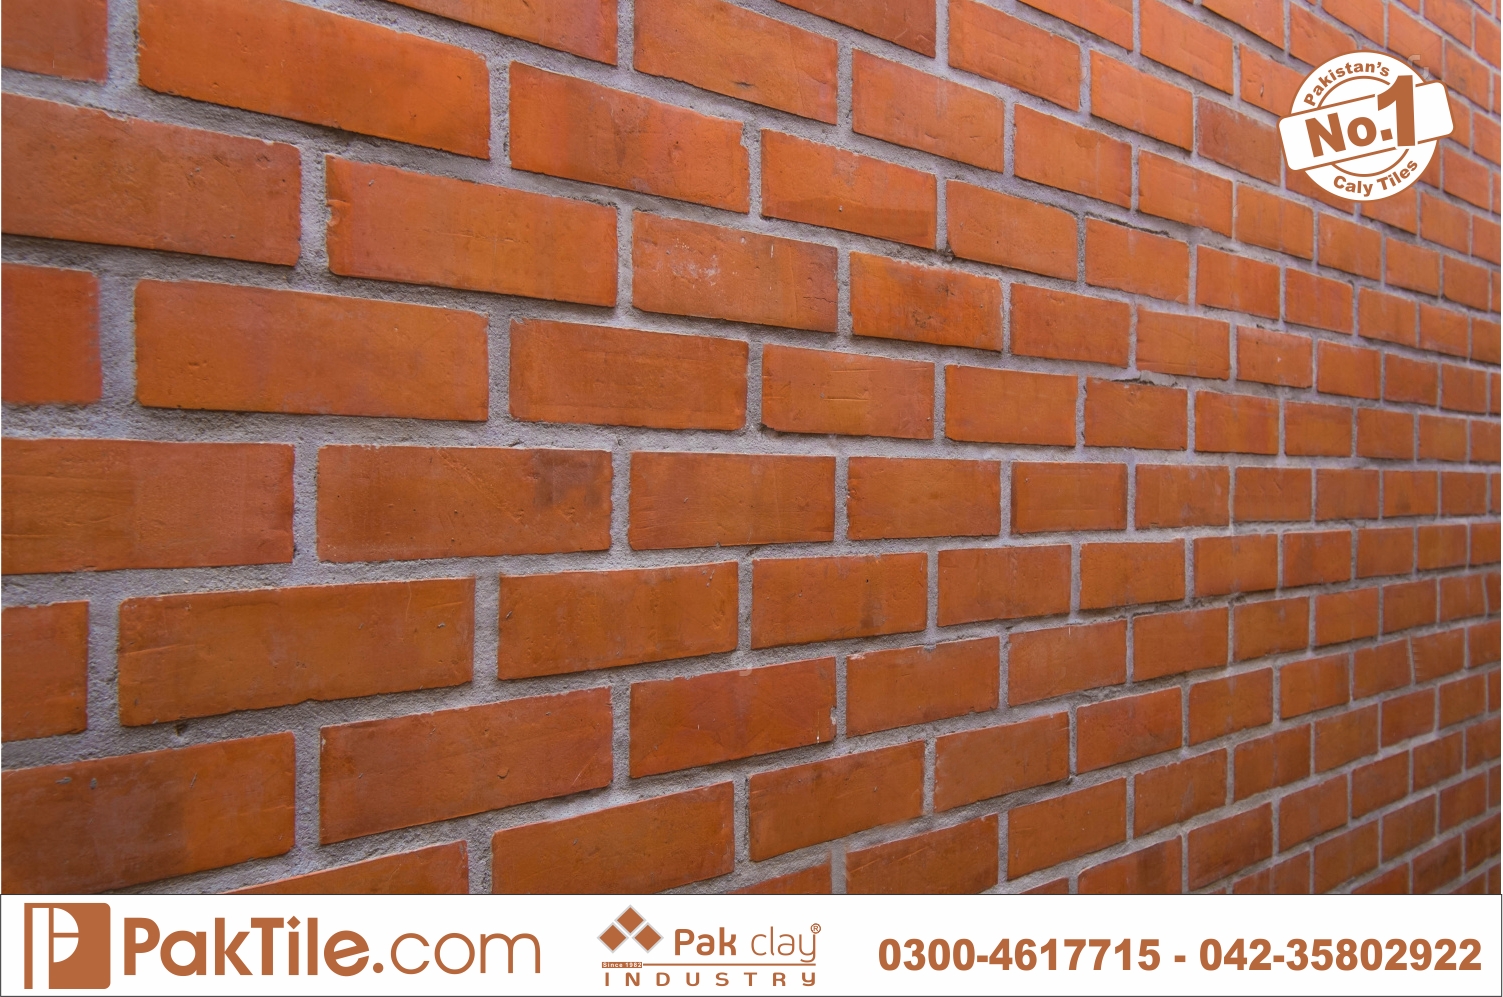 18 brick tiles price brick tiles price in pakistan red bricks price in karachi images